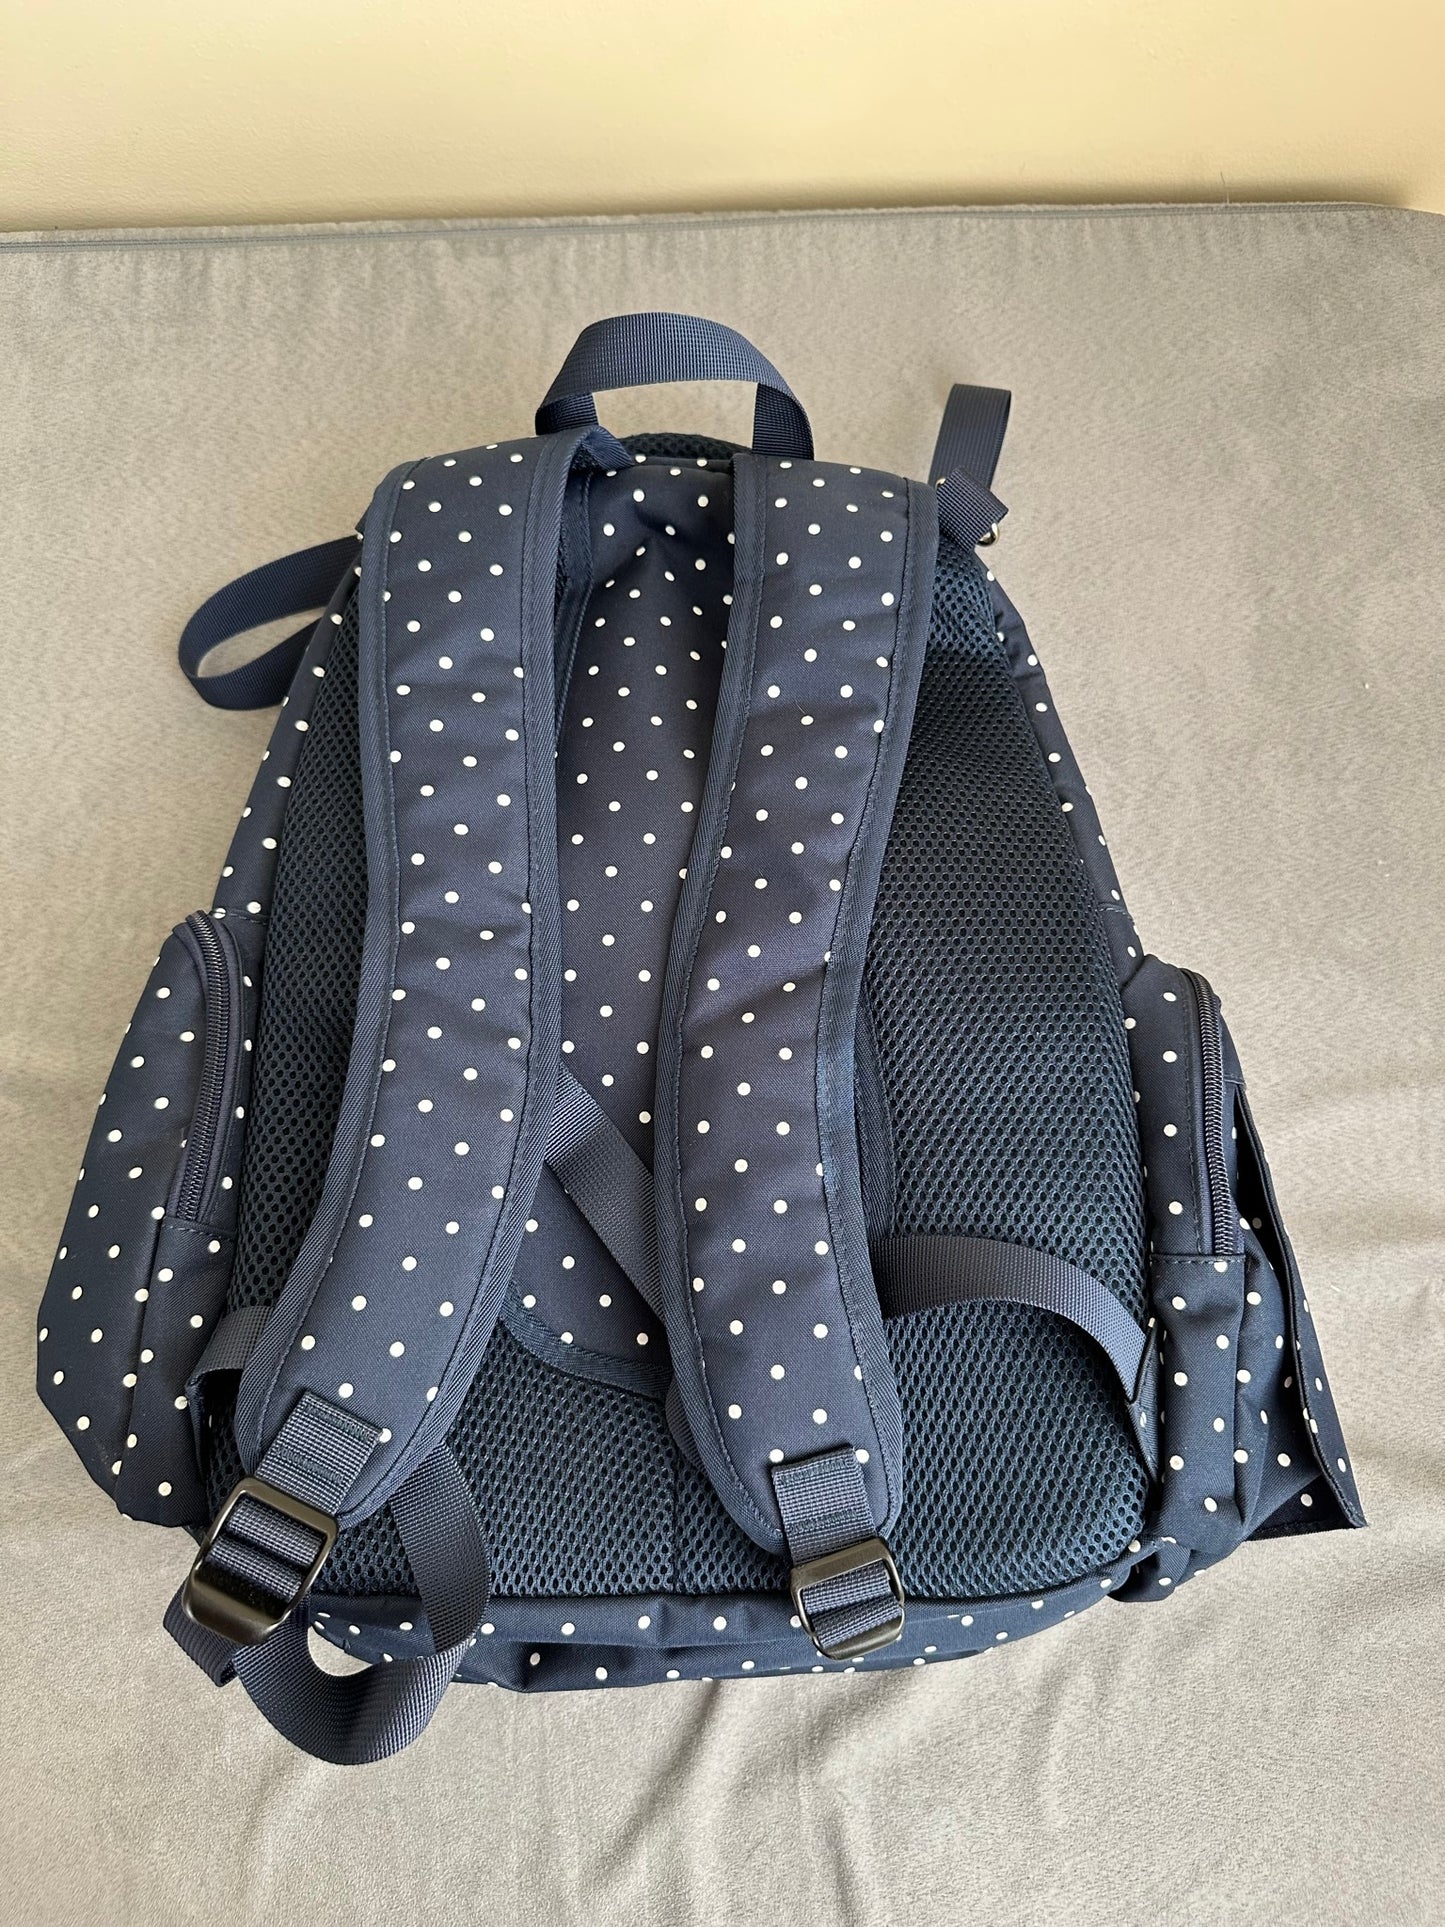 Backpack Diaper bag EUC